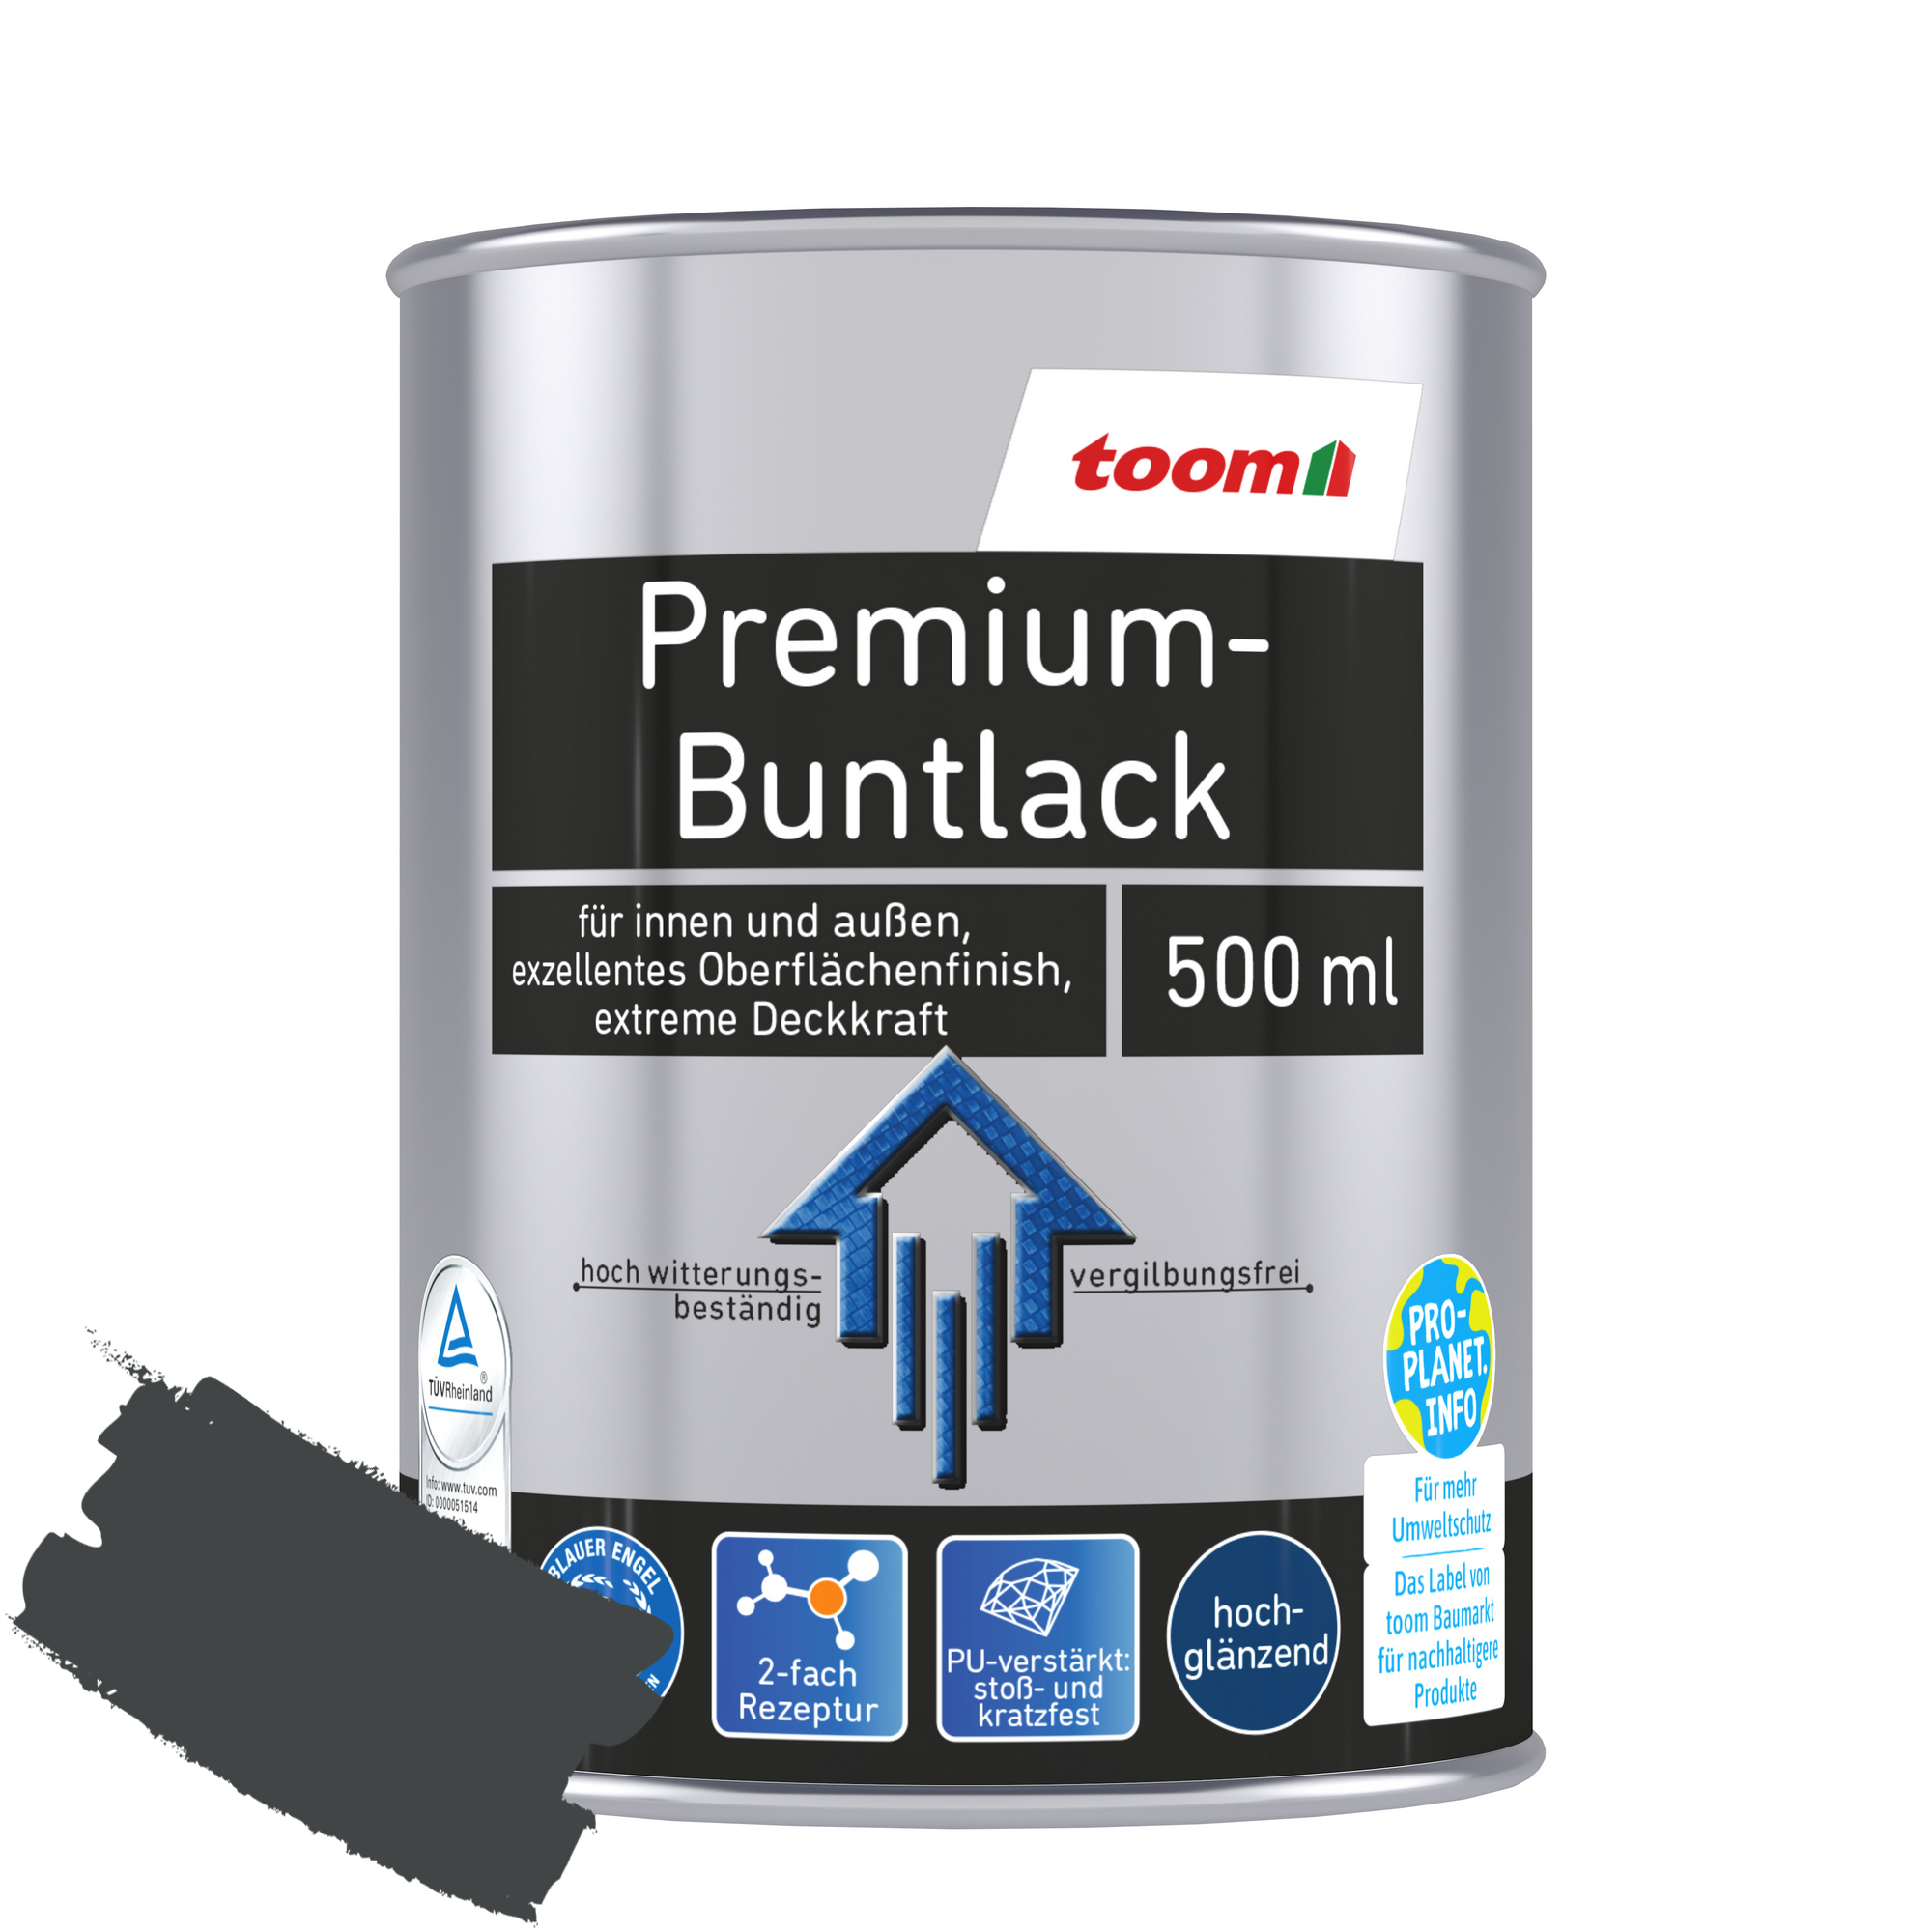 Premium-Buntlack grau glänzend 500 ml + product picture